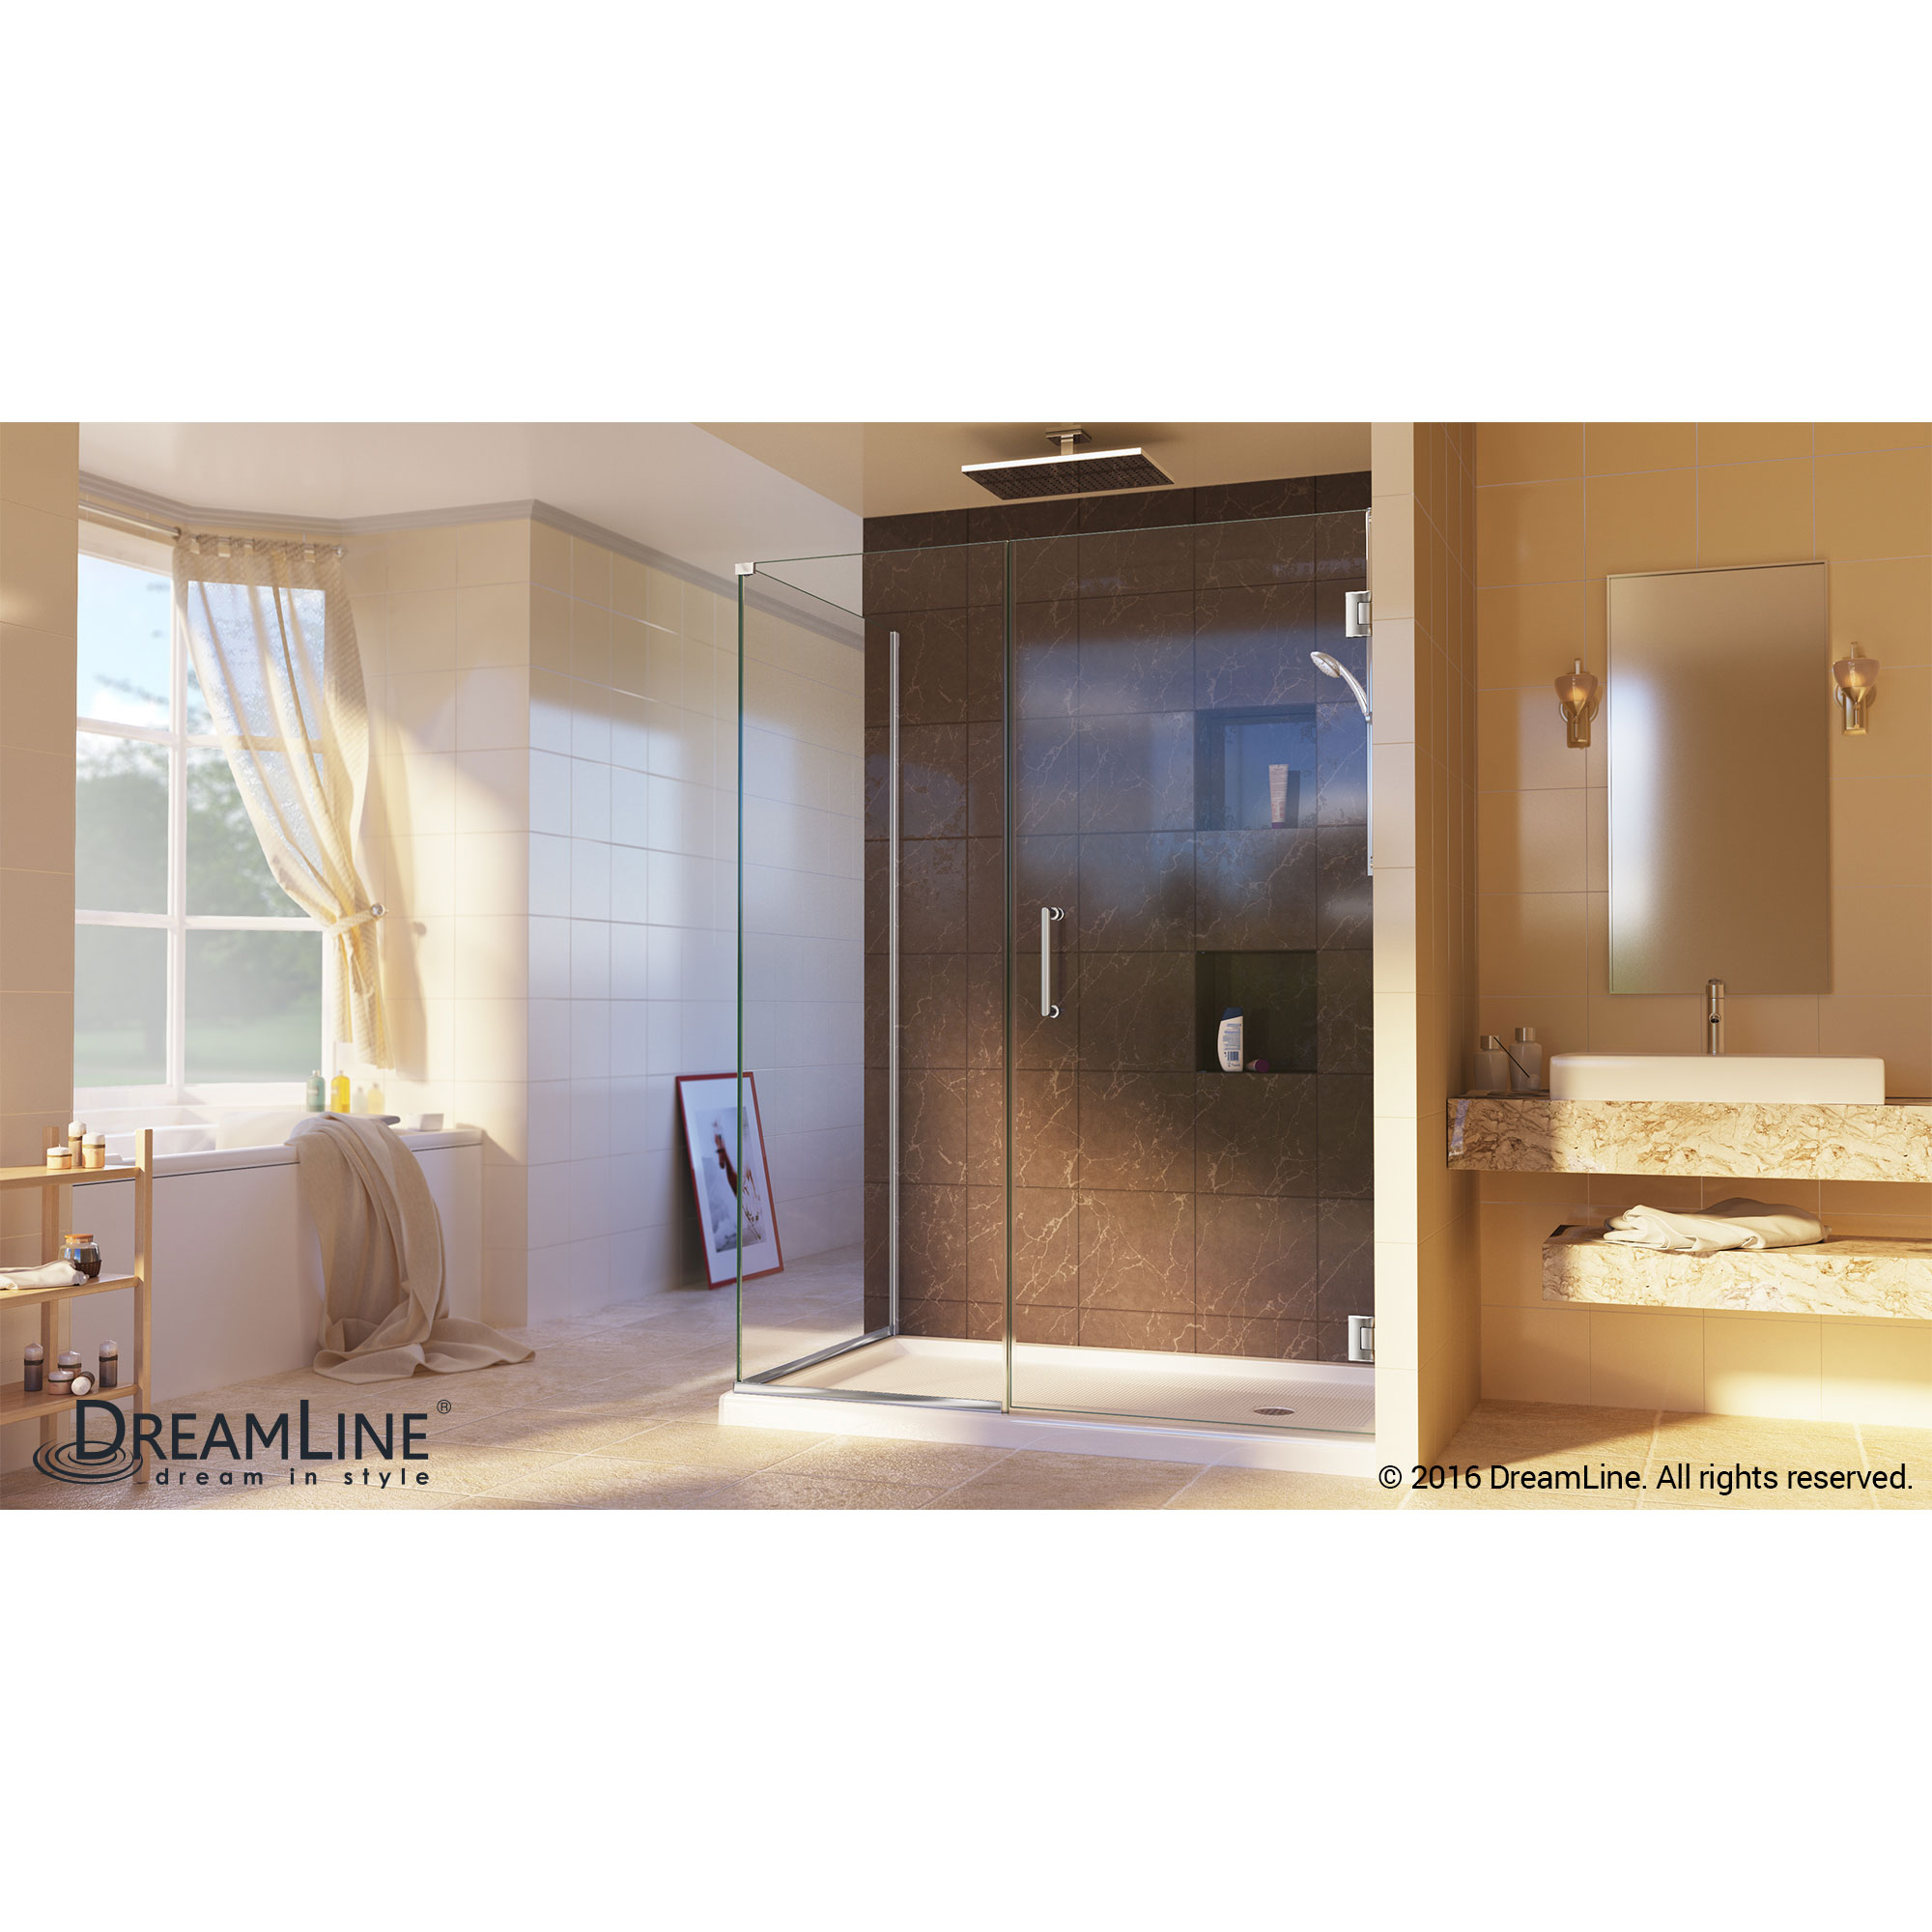 DreamLine SHEN-24480300-01 Unidoor Plus Hinged Shower Enclosure In Chrome Finish Hardware